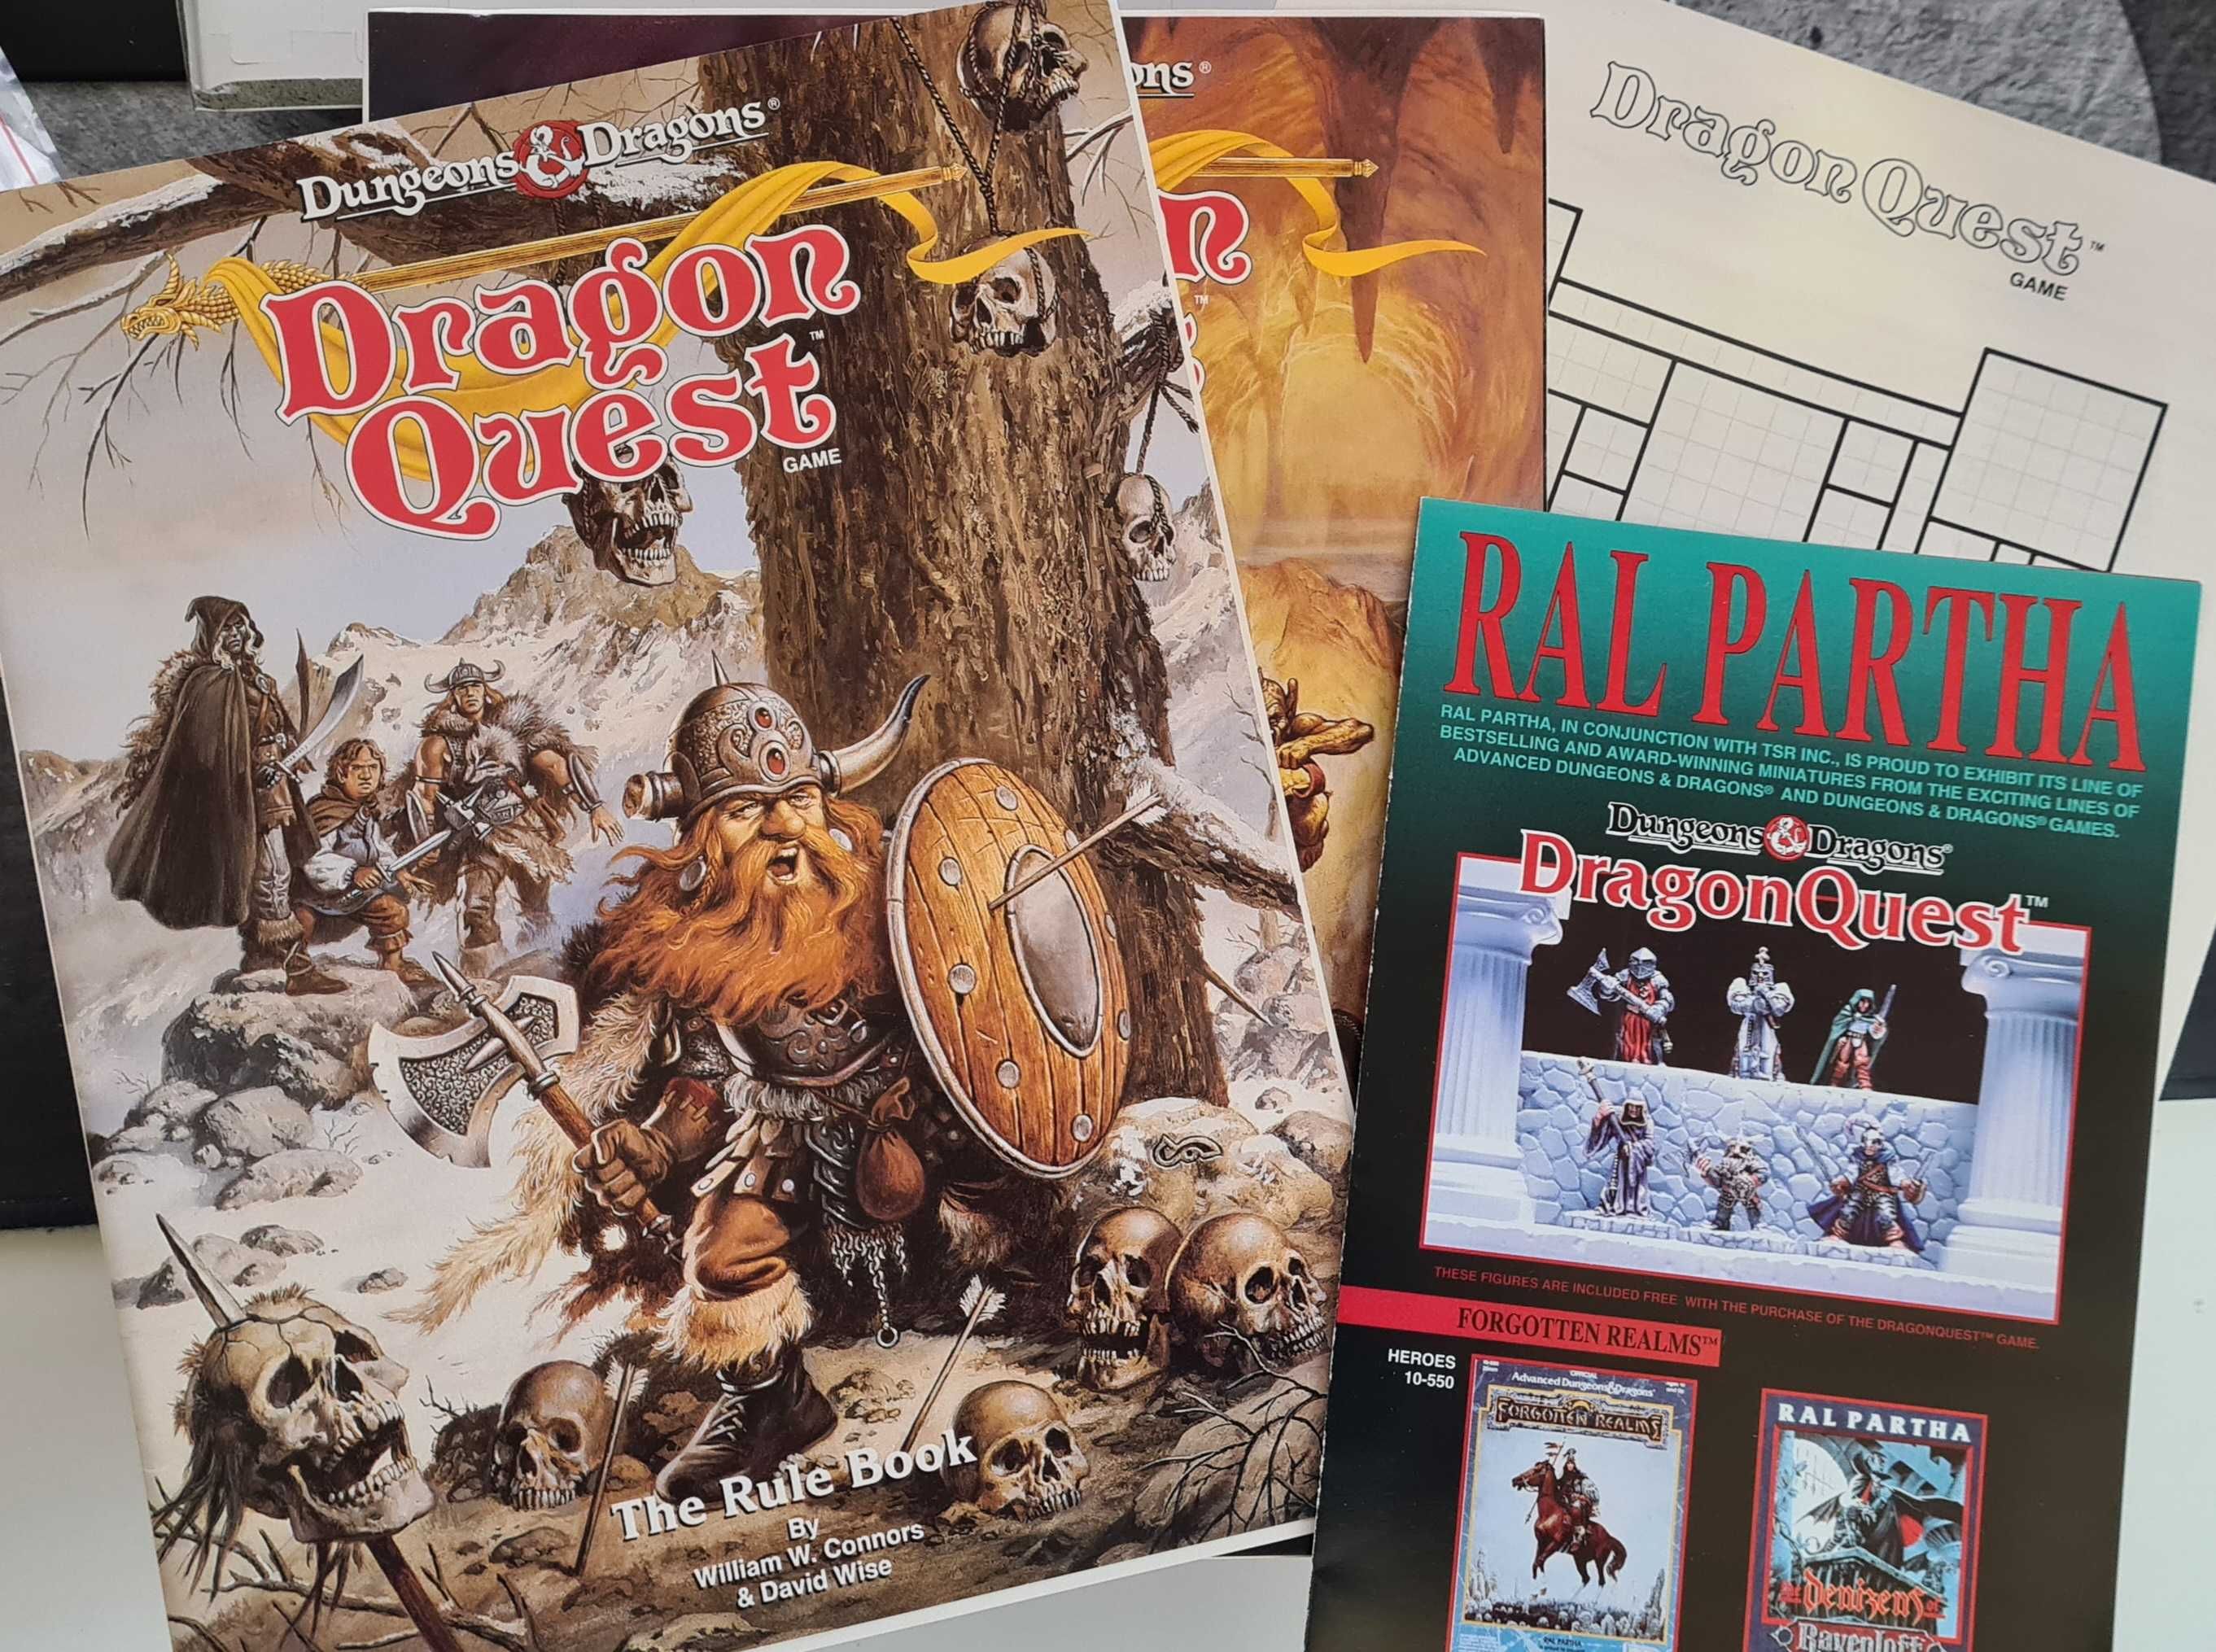 Dungeons & Dragons Dragon Quest TSR gra planszowa